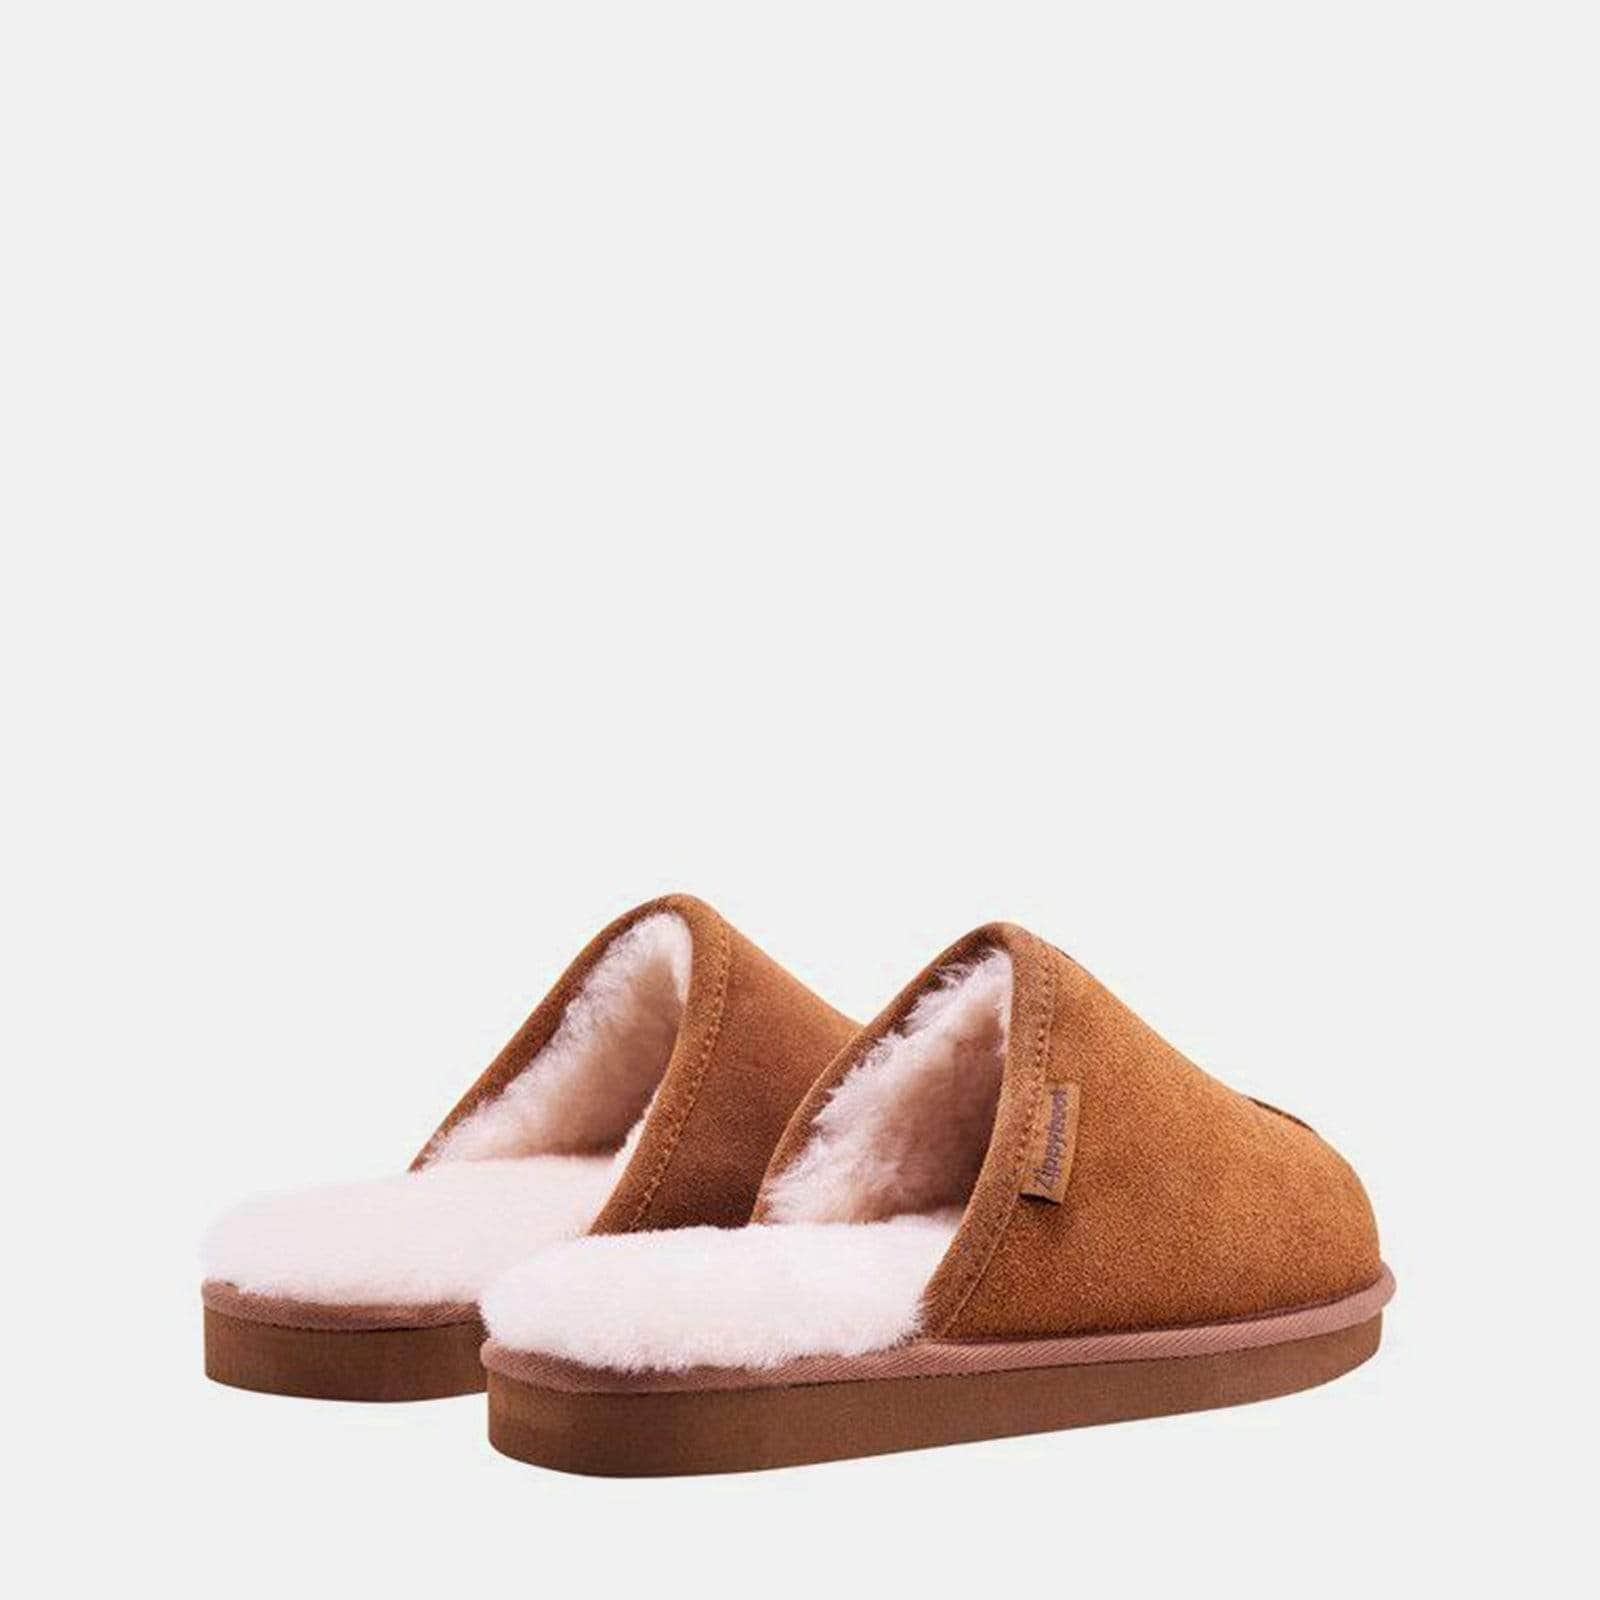 redfoot sheepskin slippers